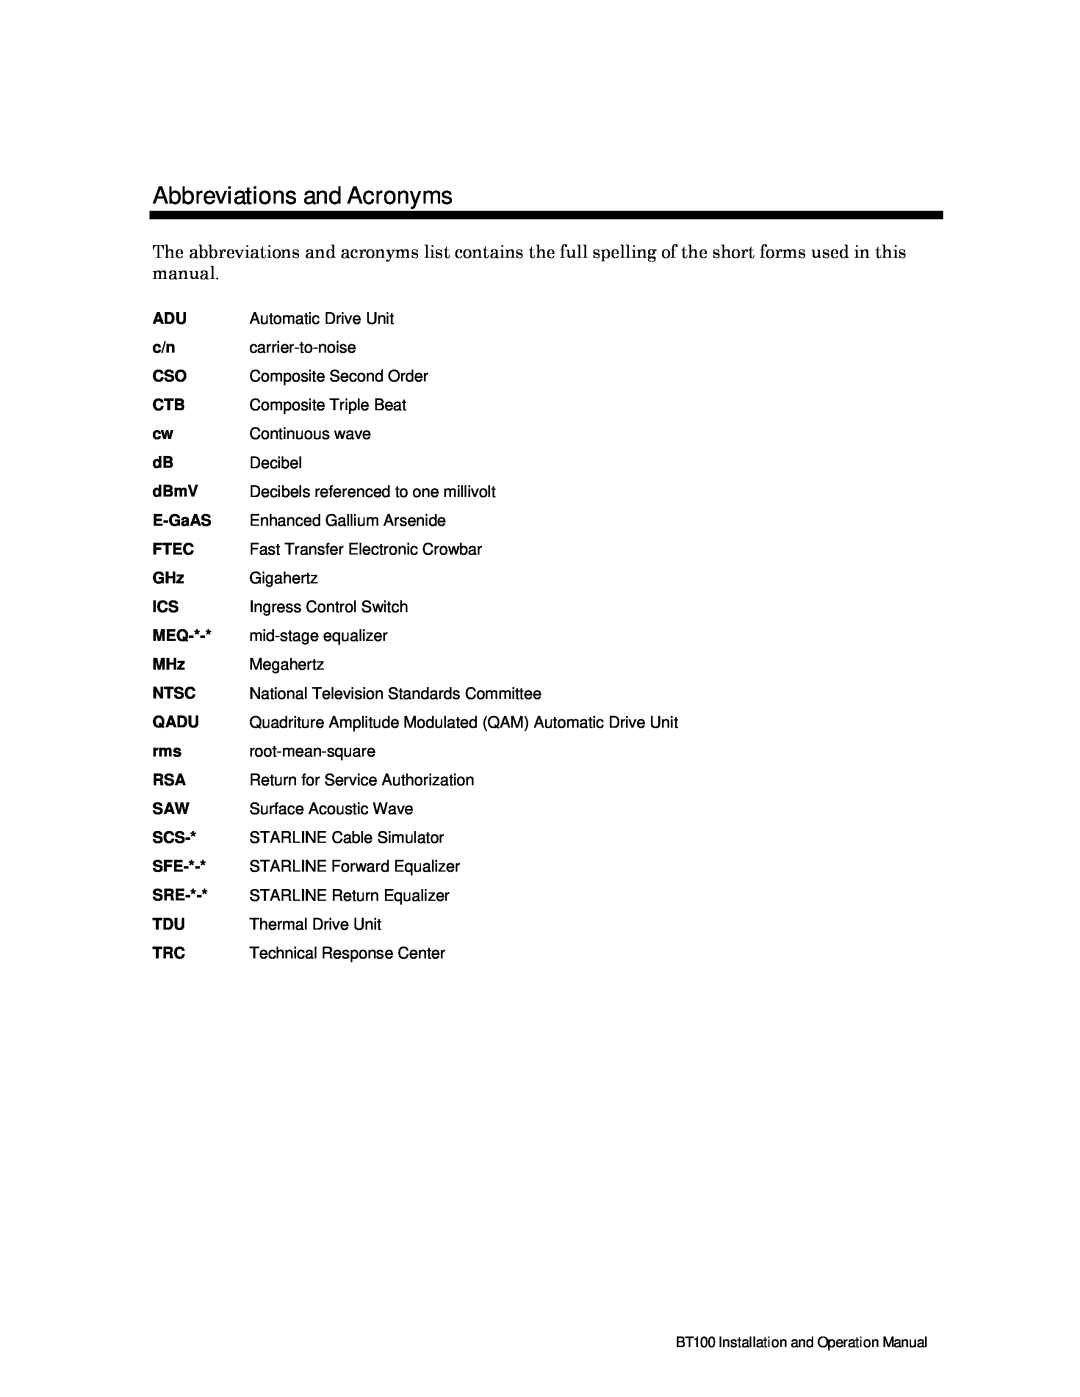 Motorola BT100 operation manual Abbreviations and Acronyms 